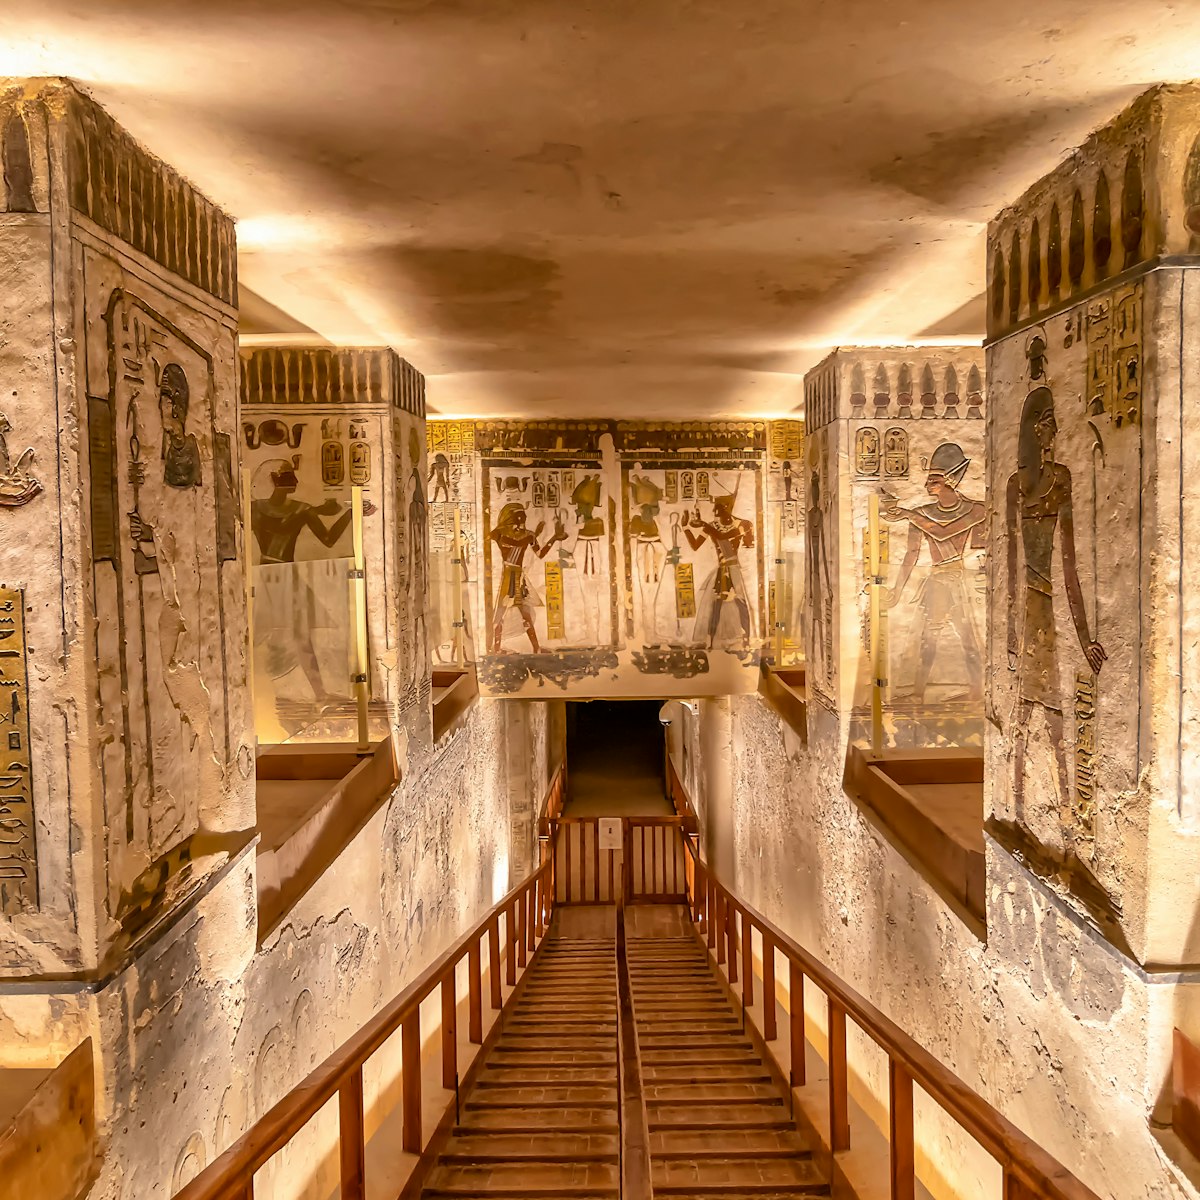 Tomb KV11, the tomb of Ancient Egyptian Pharaoh Ramesses III.